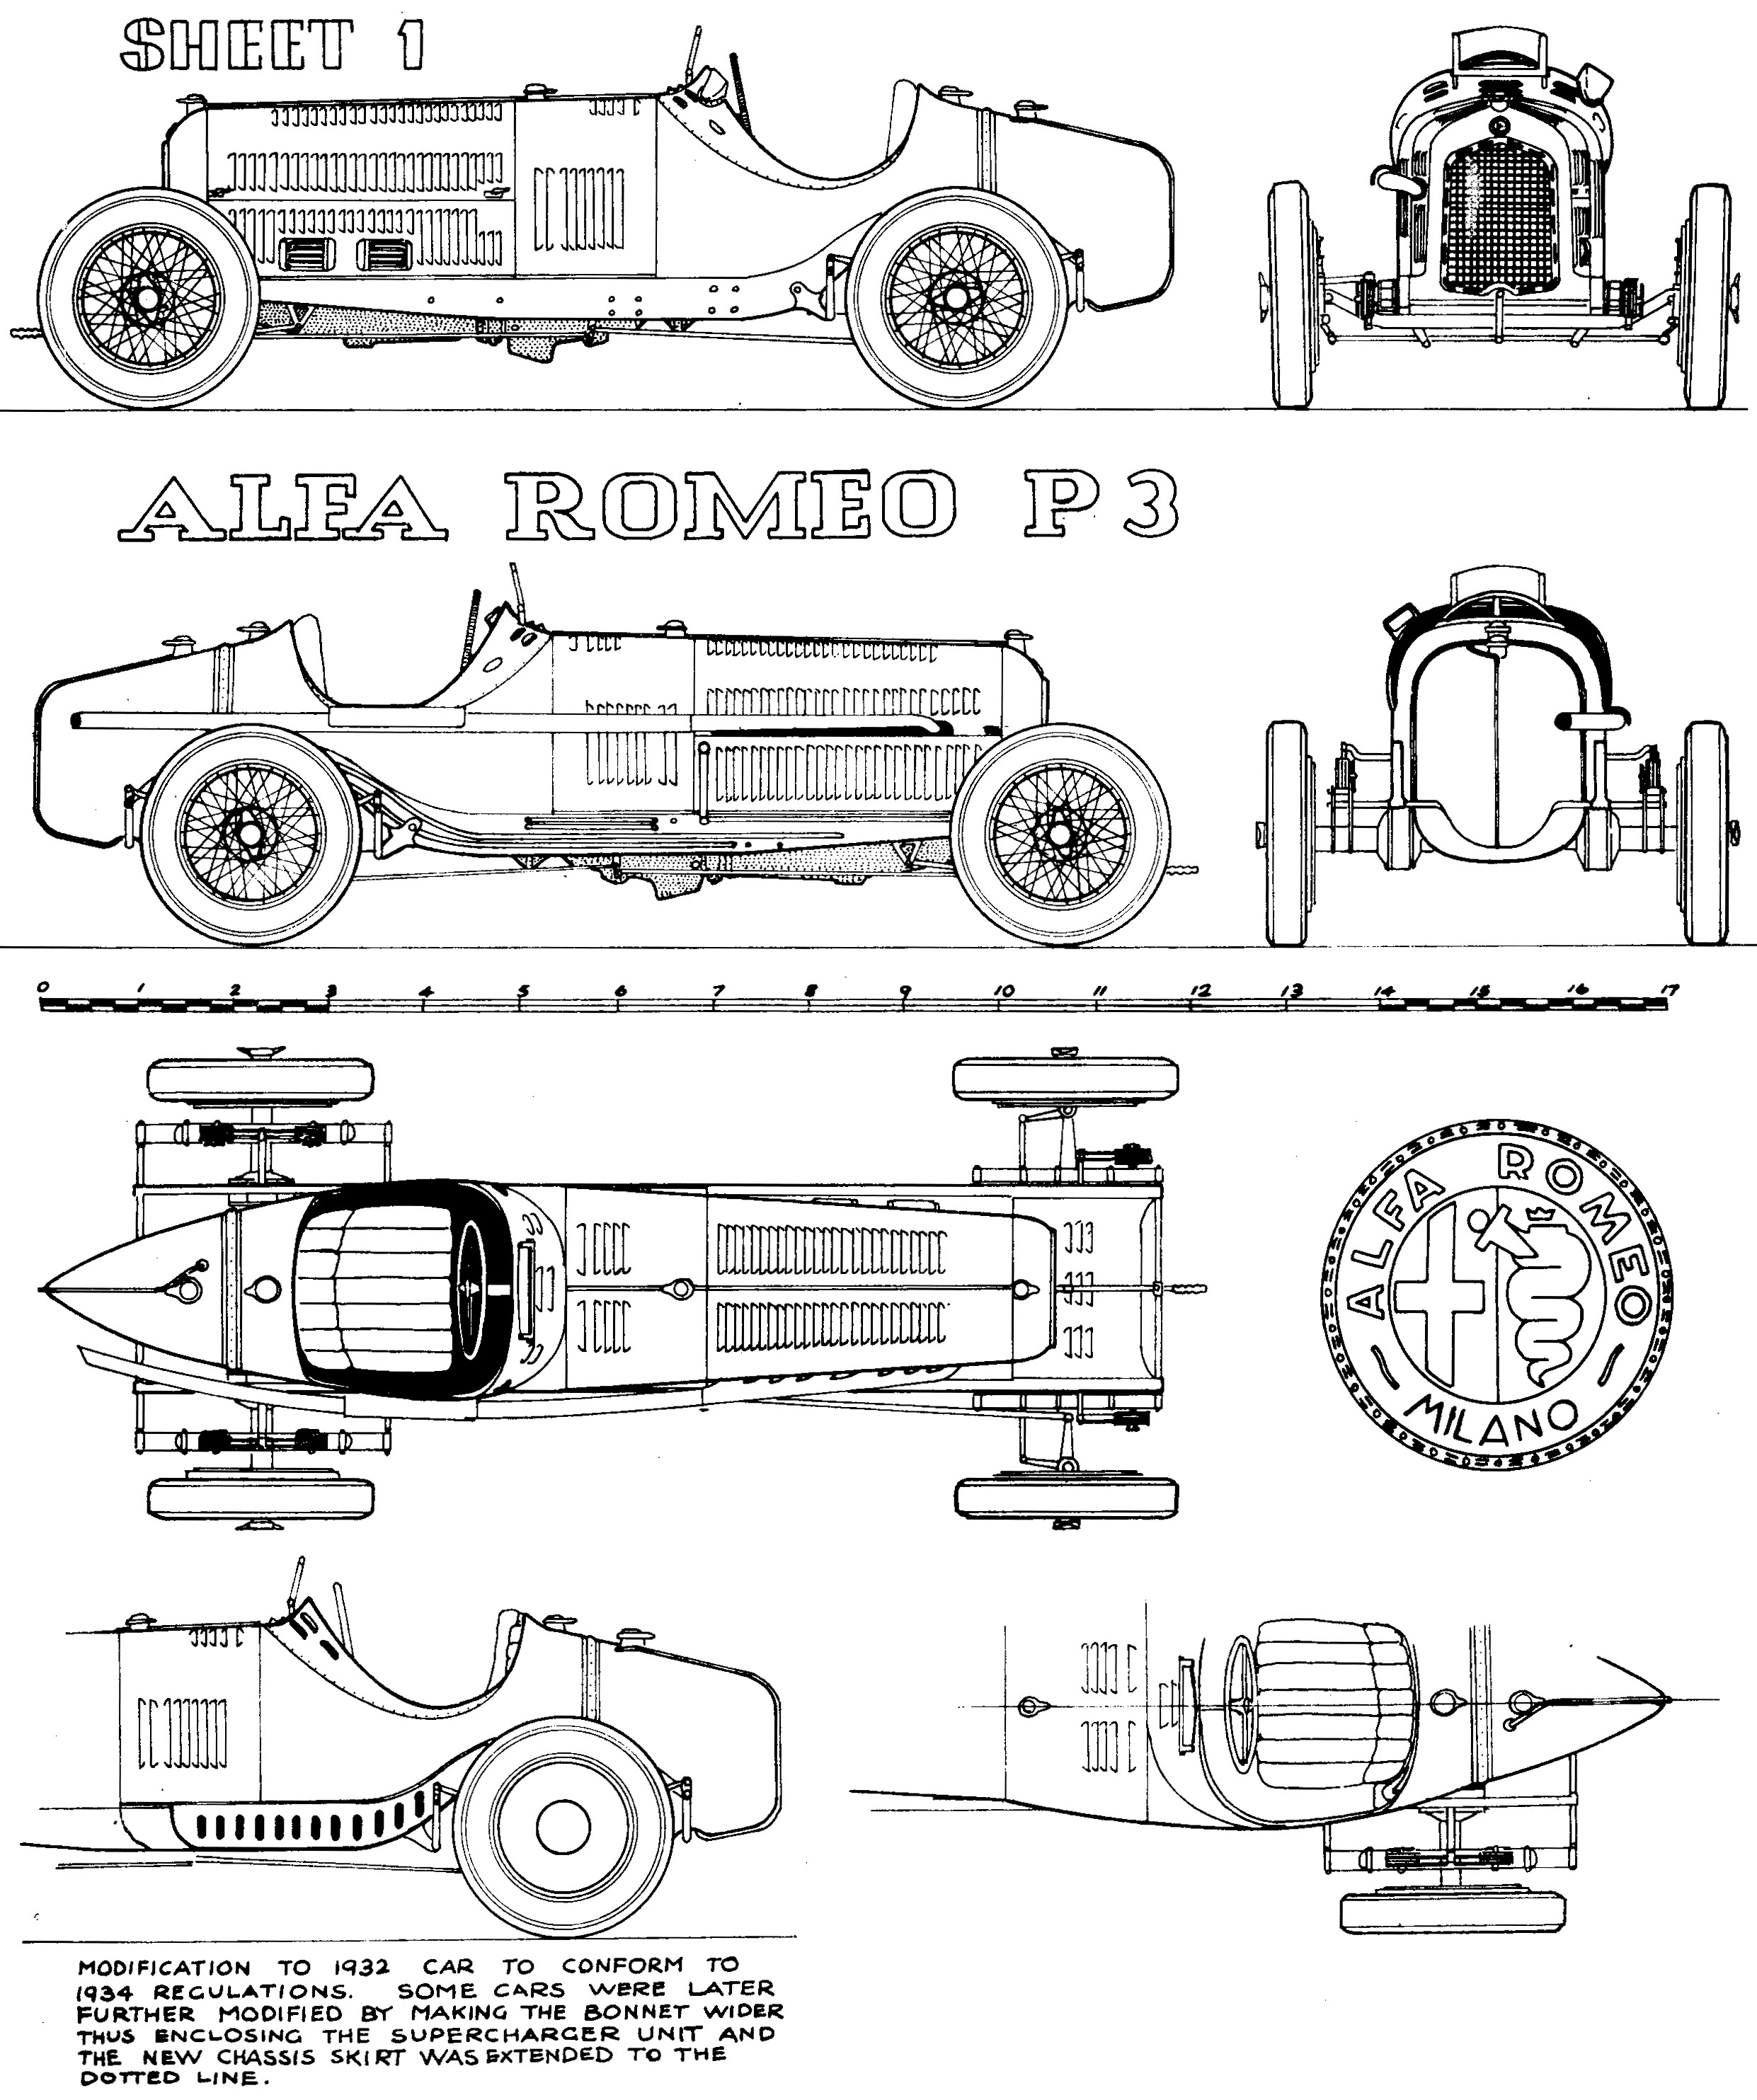 F1 Car Diagram Alfa Romeo P3 1932 33 Smcars Net Car Blueprints forum Of F1 Car Diagram